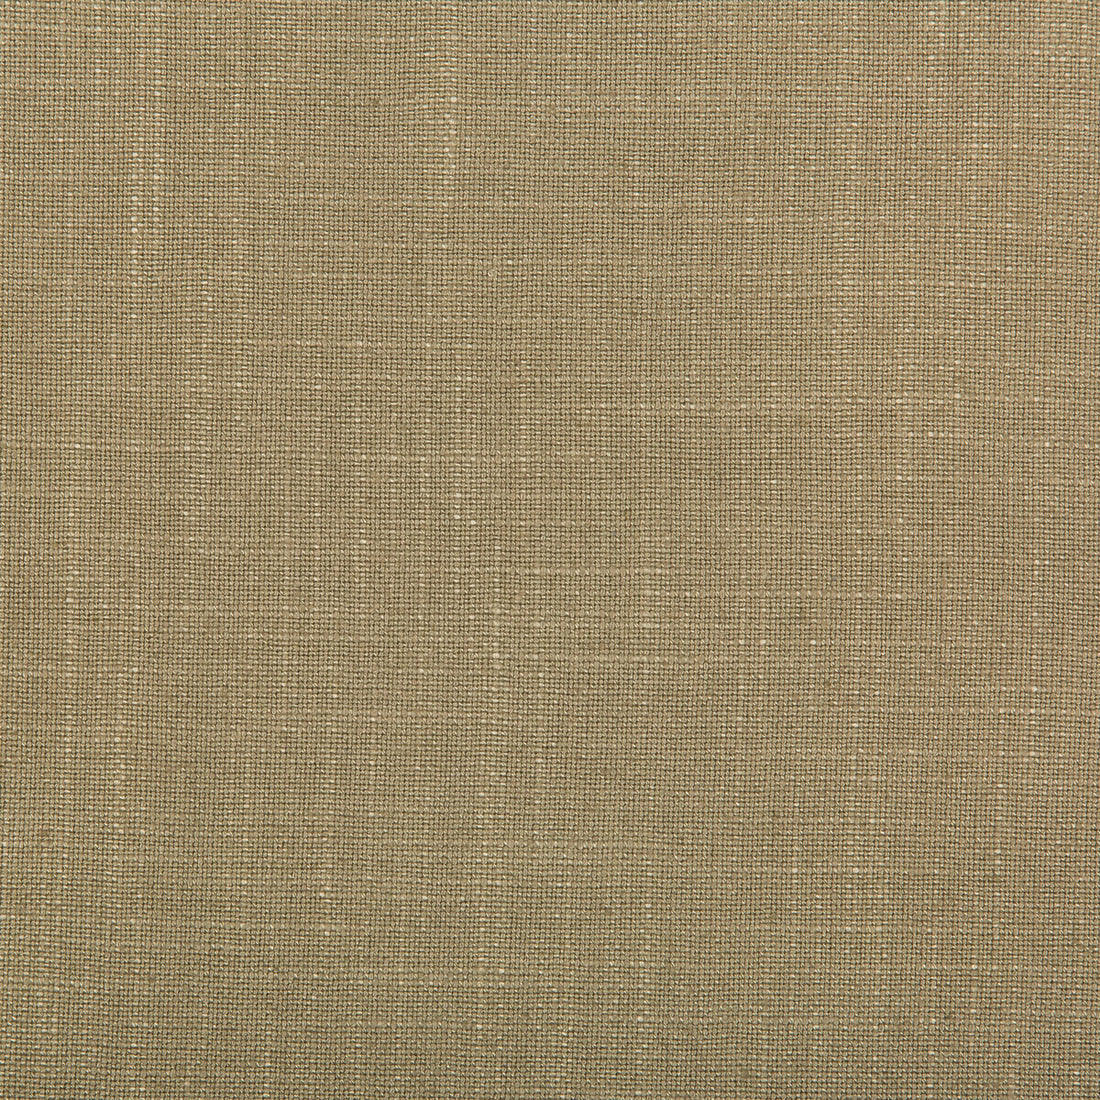 Aura fabric in tea color - pattern 35520.16.0 - by Kravet Design